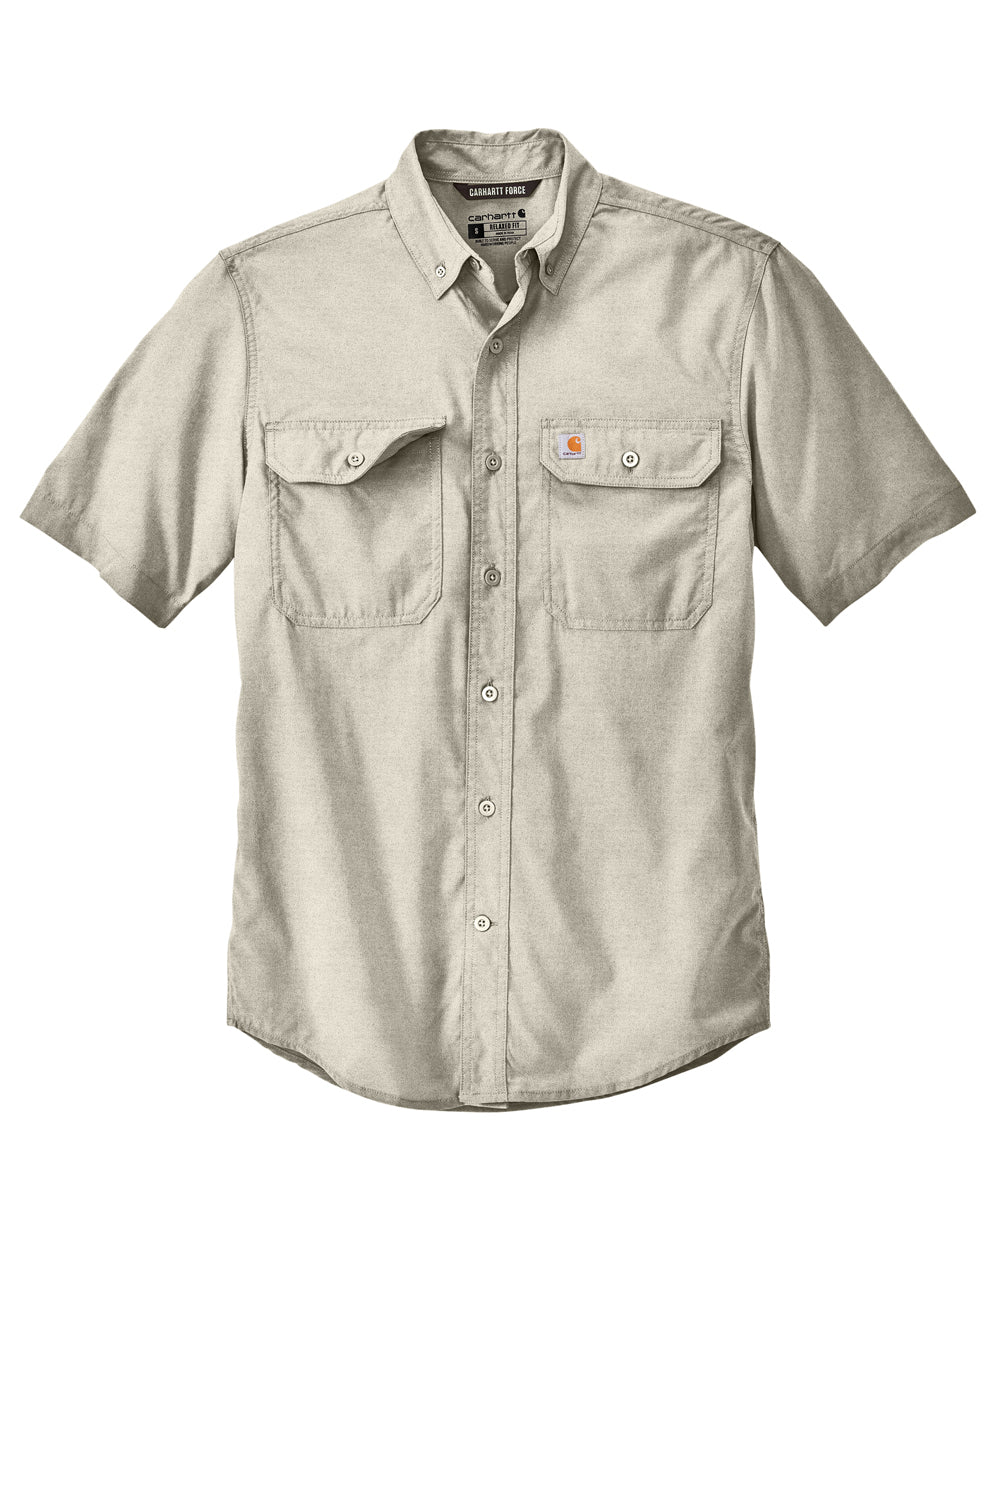 Carhartt CT105292 Mens Force Moisture Wicking Short Sleeve Button Down Shirt w/ Double Pockets Steel Grey Flat Front